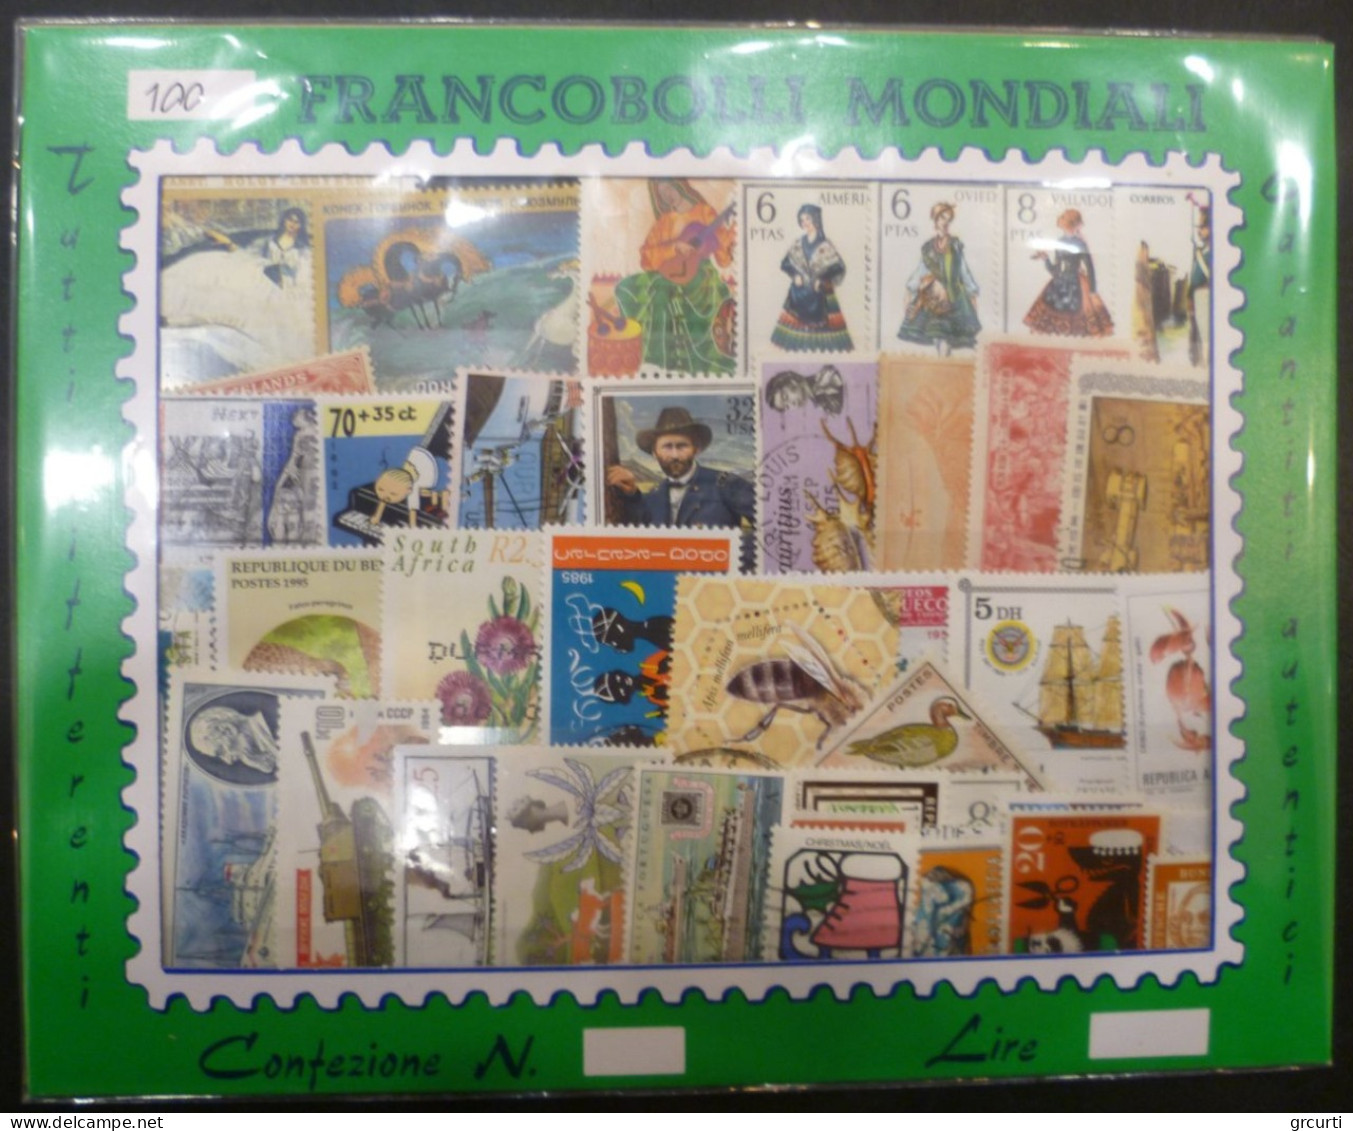 100 Francobolli Mondiali Differenti - Lots & Kiloware (mixtures) - Max. 999 Stamps